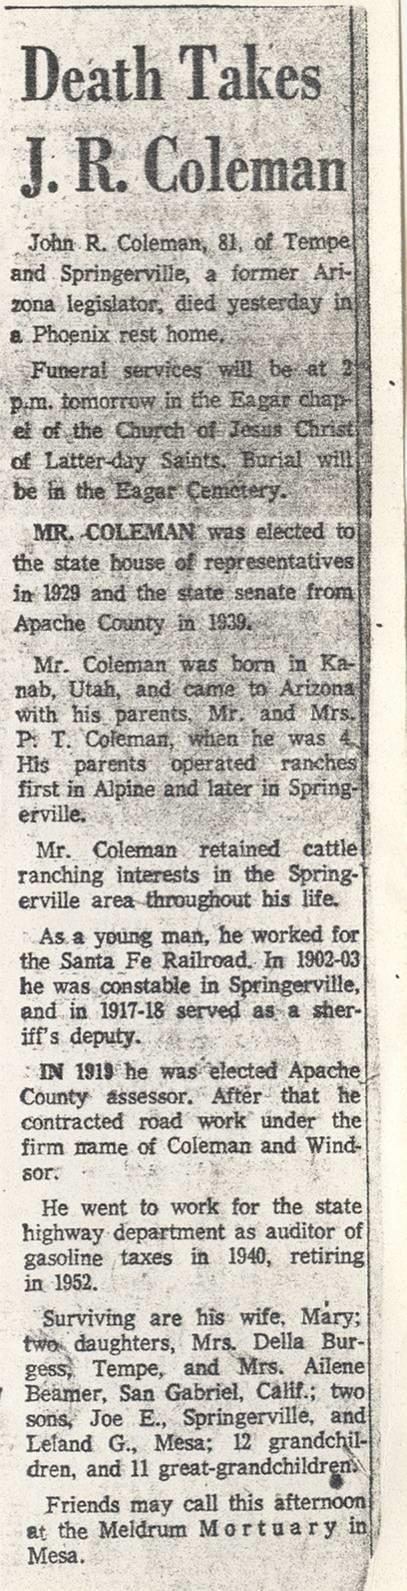 John Robert Coleman Obituary Death takes J.R.Coleman John R.